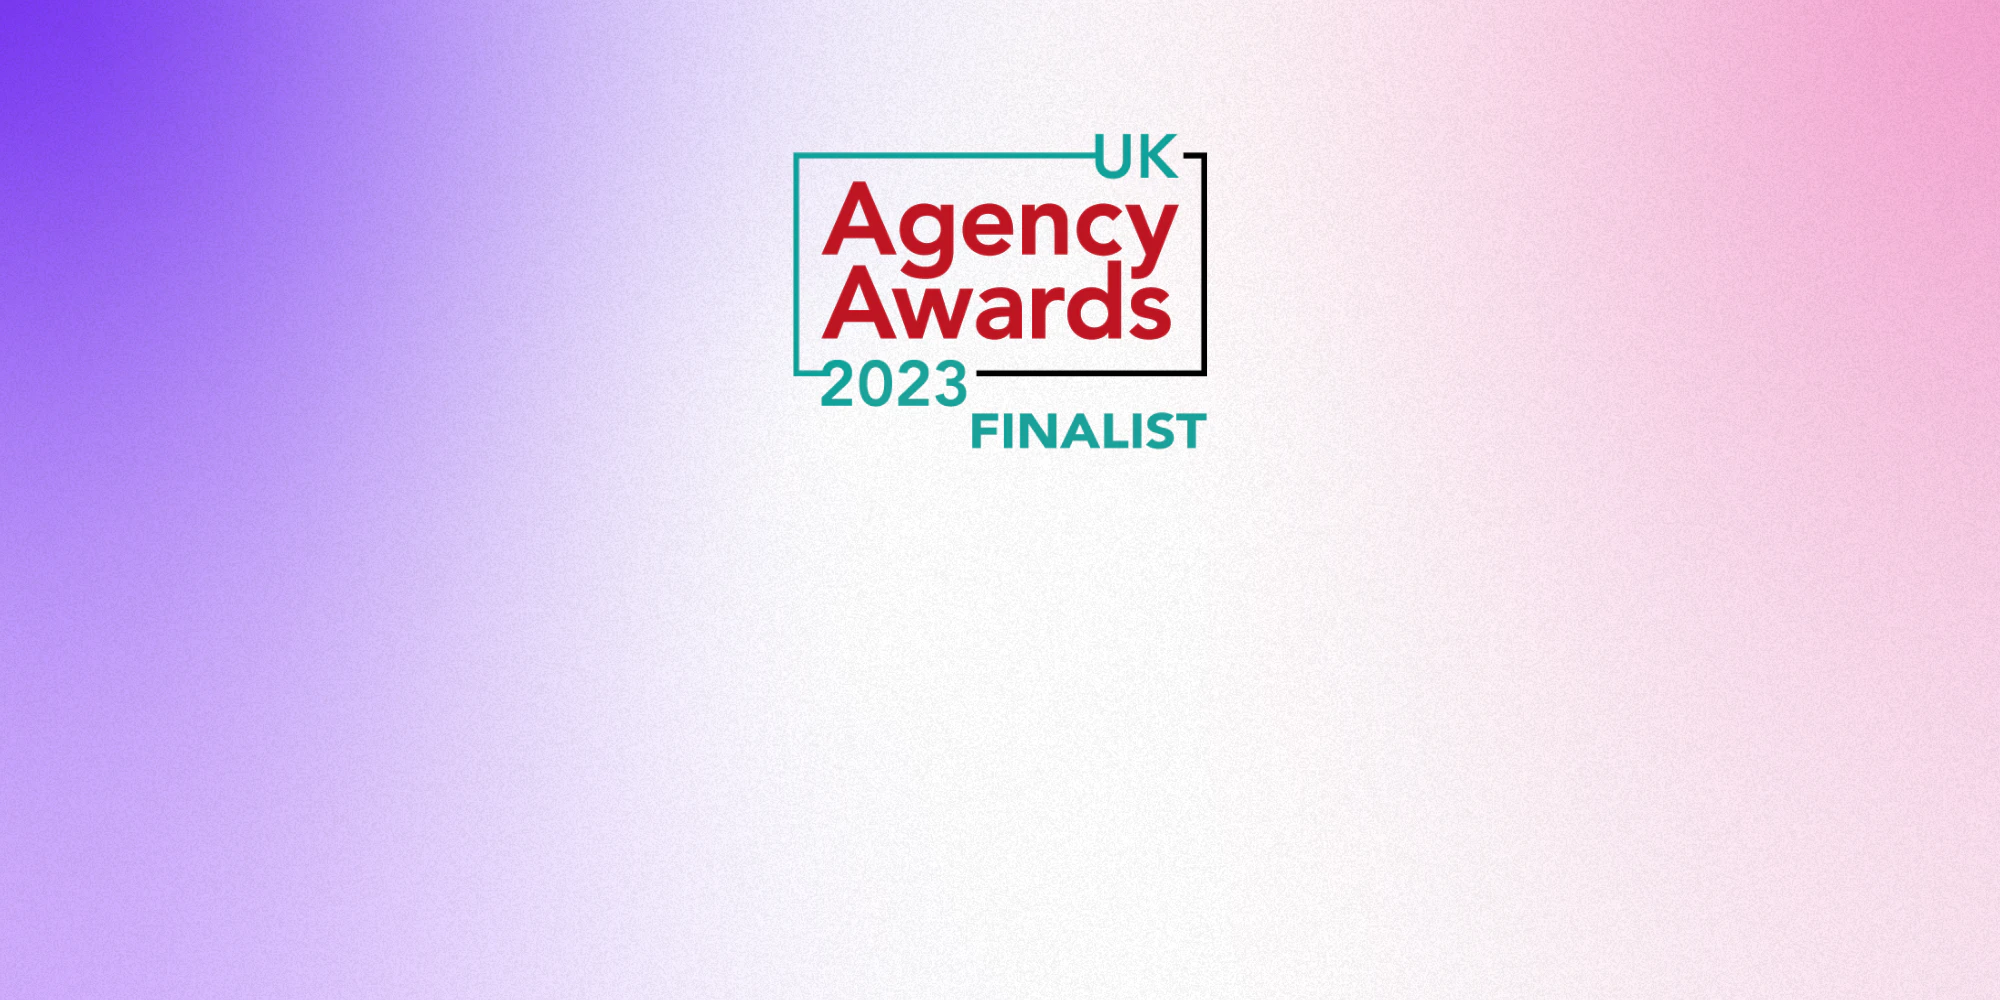 UK Agency Awards 2023 Finalist badge